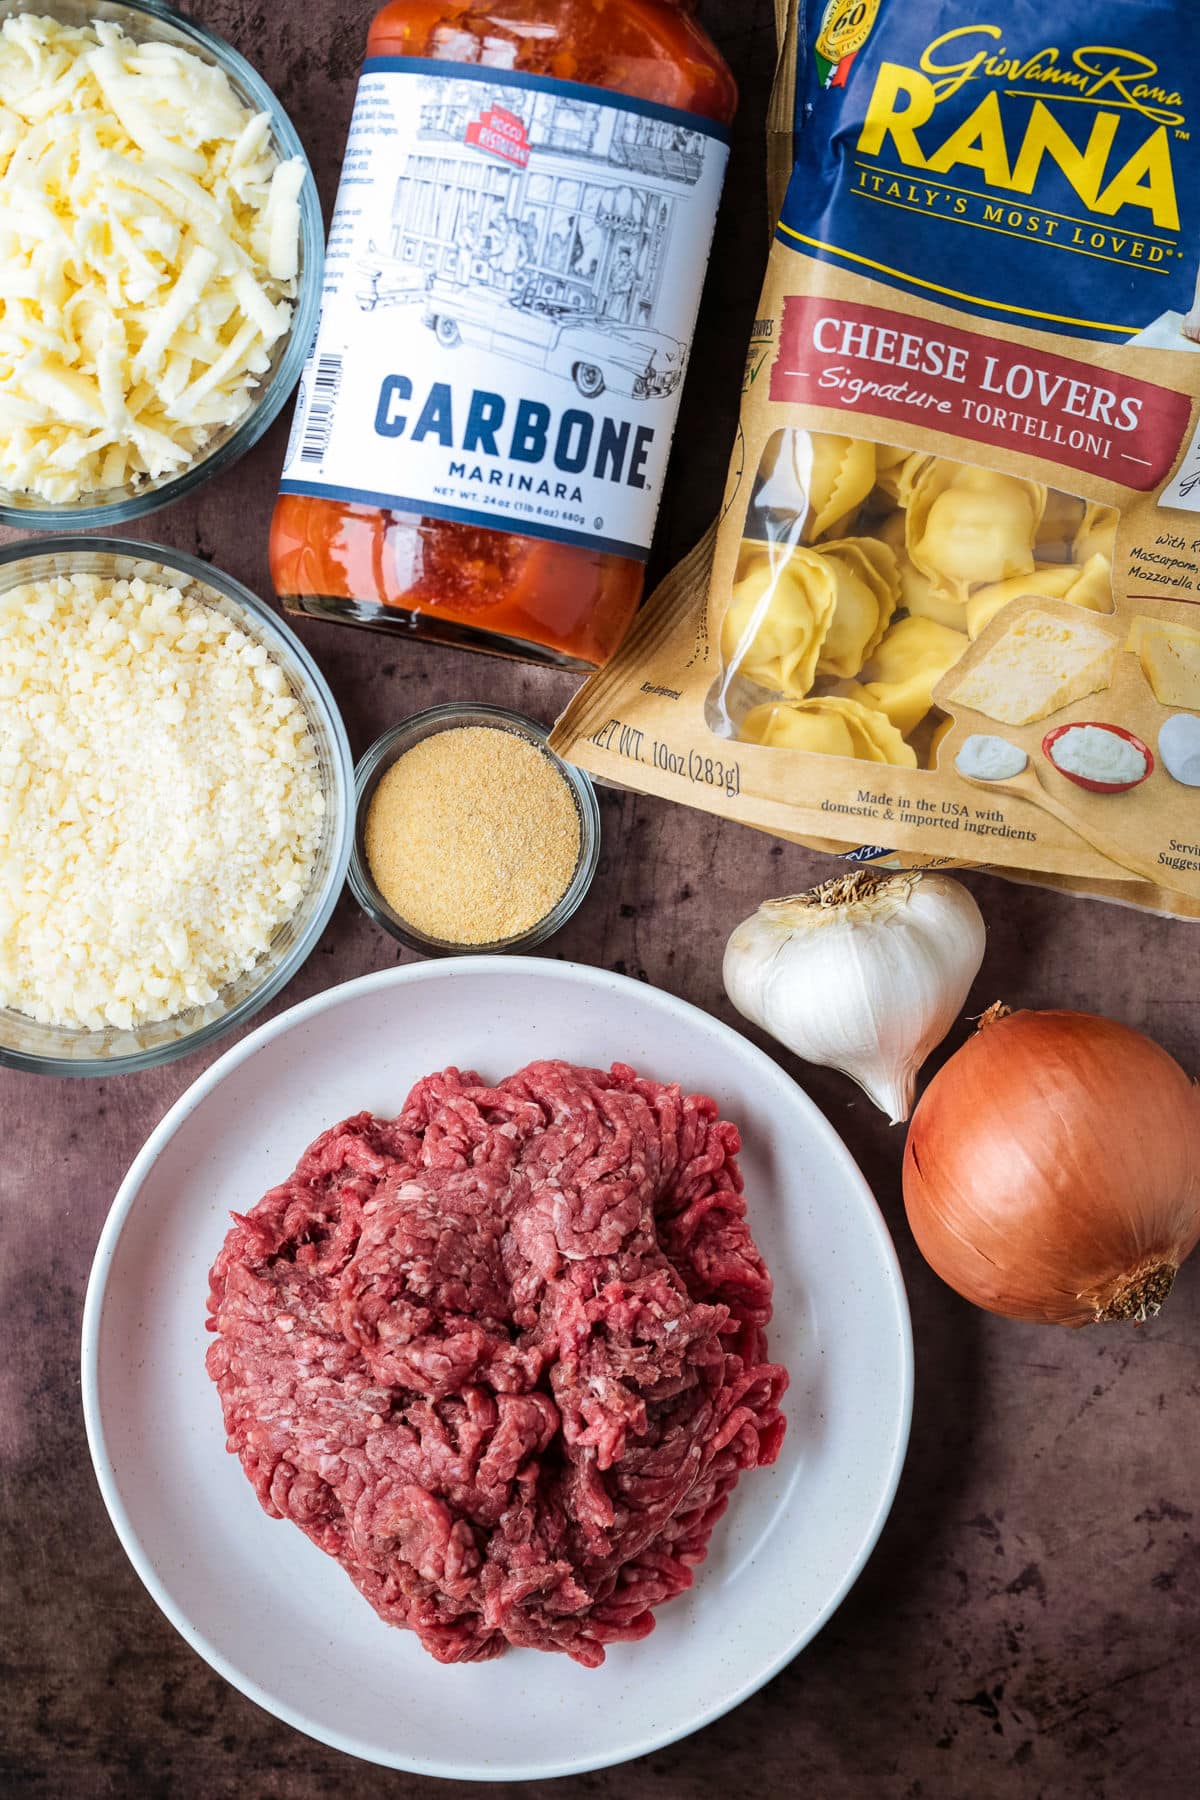 ingredients for making tortellini casserole